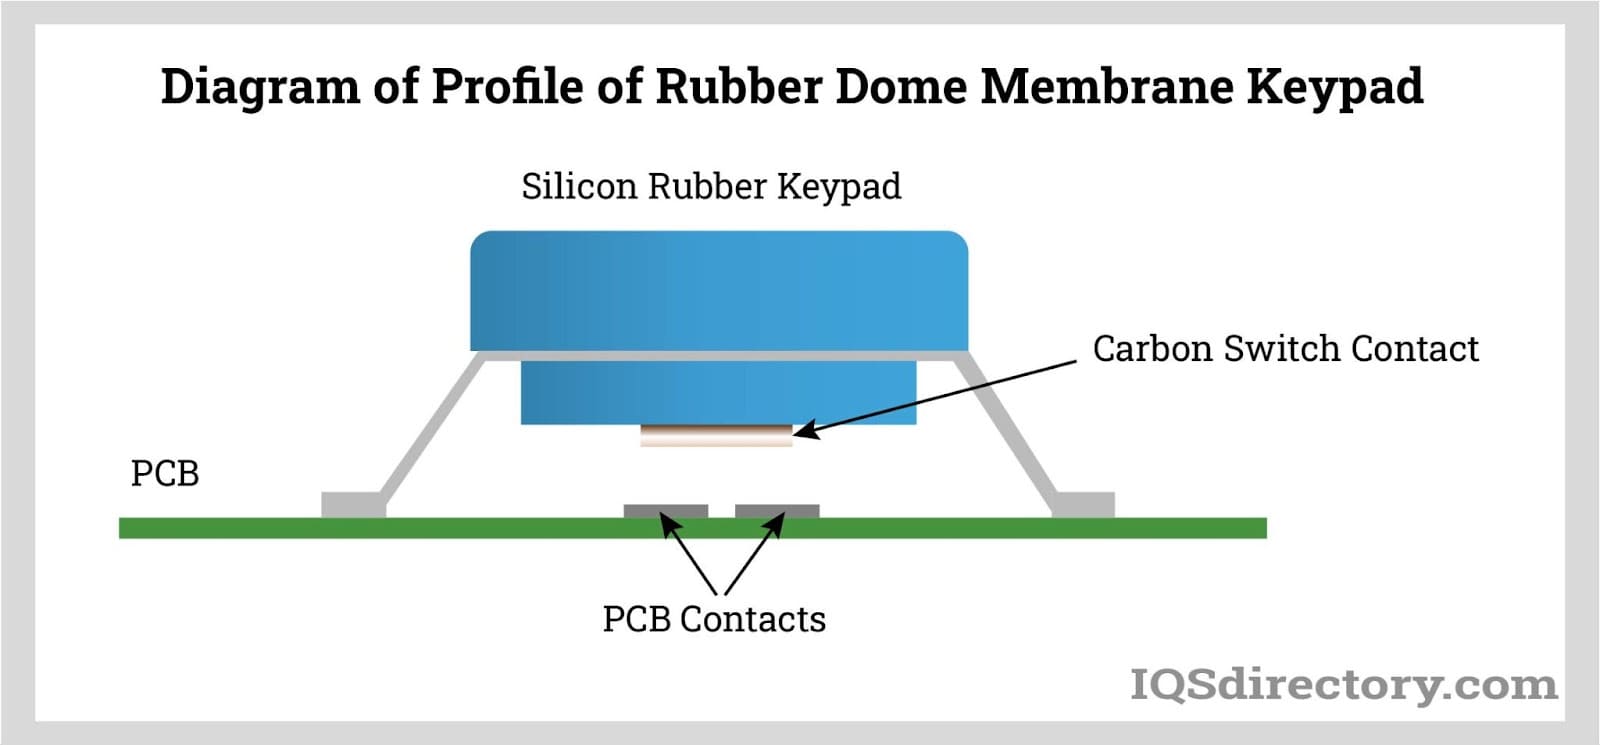 Diagram of Profile of Rubber Dome Membrane Keypad